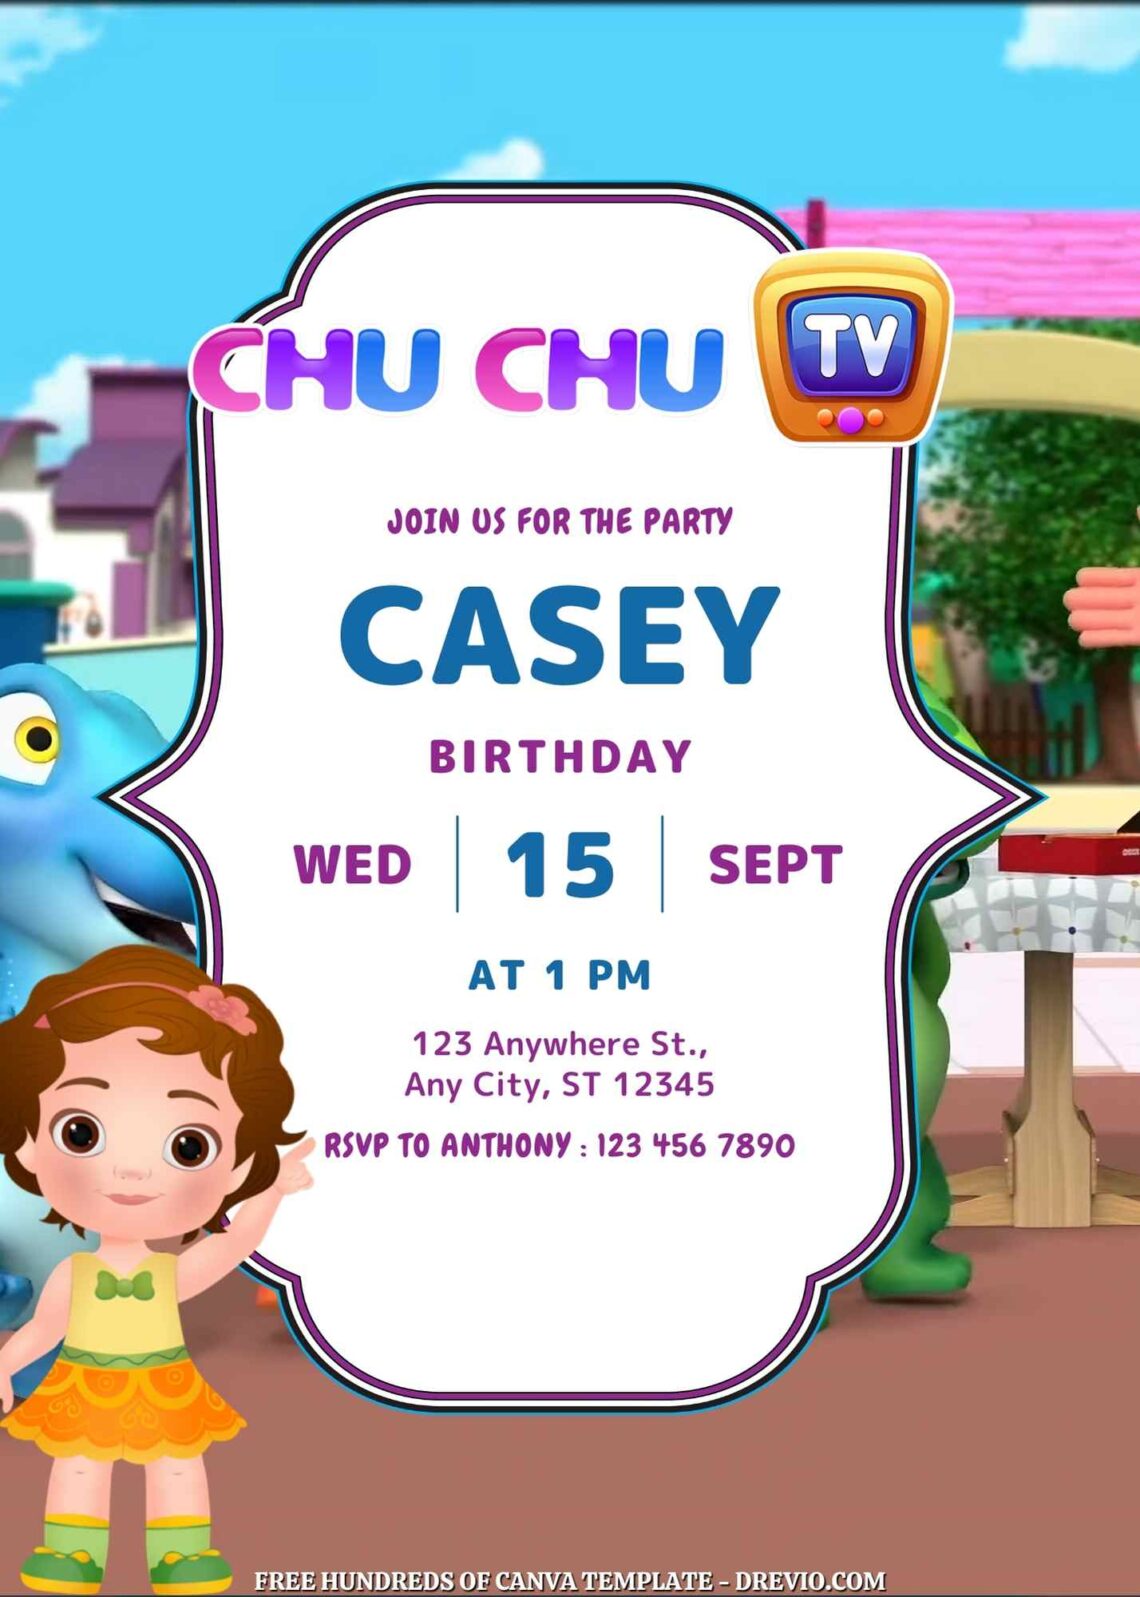 Free ChuChu TV Birthday Invitations